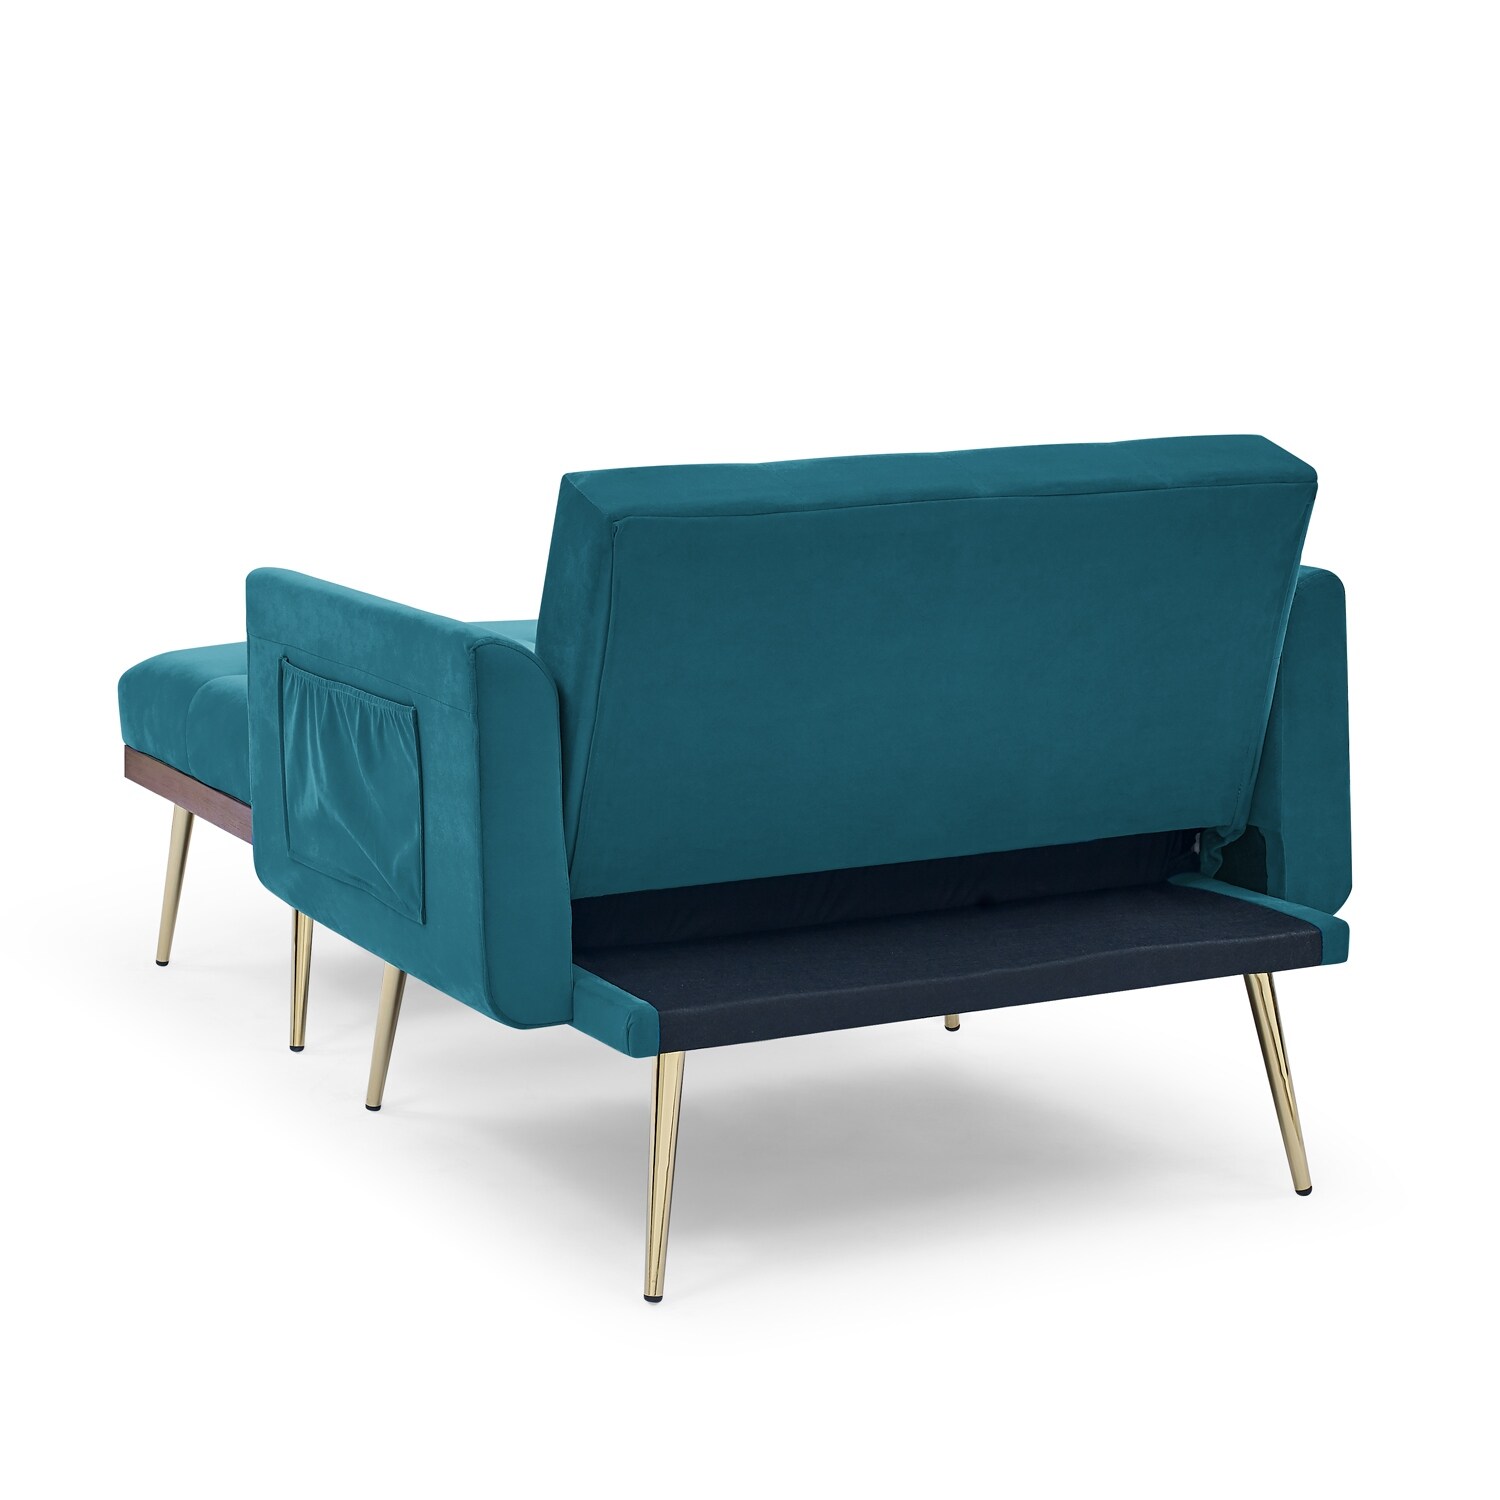 Recline Sofa Chair with Ottoman, Pocket